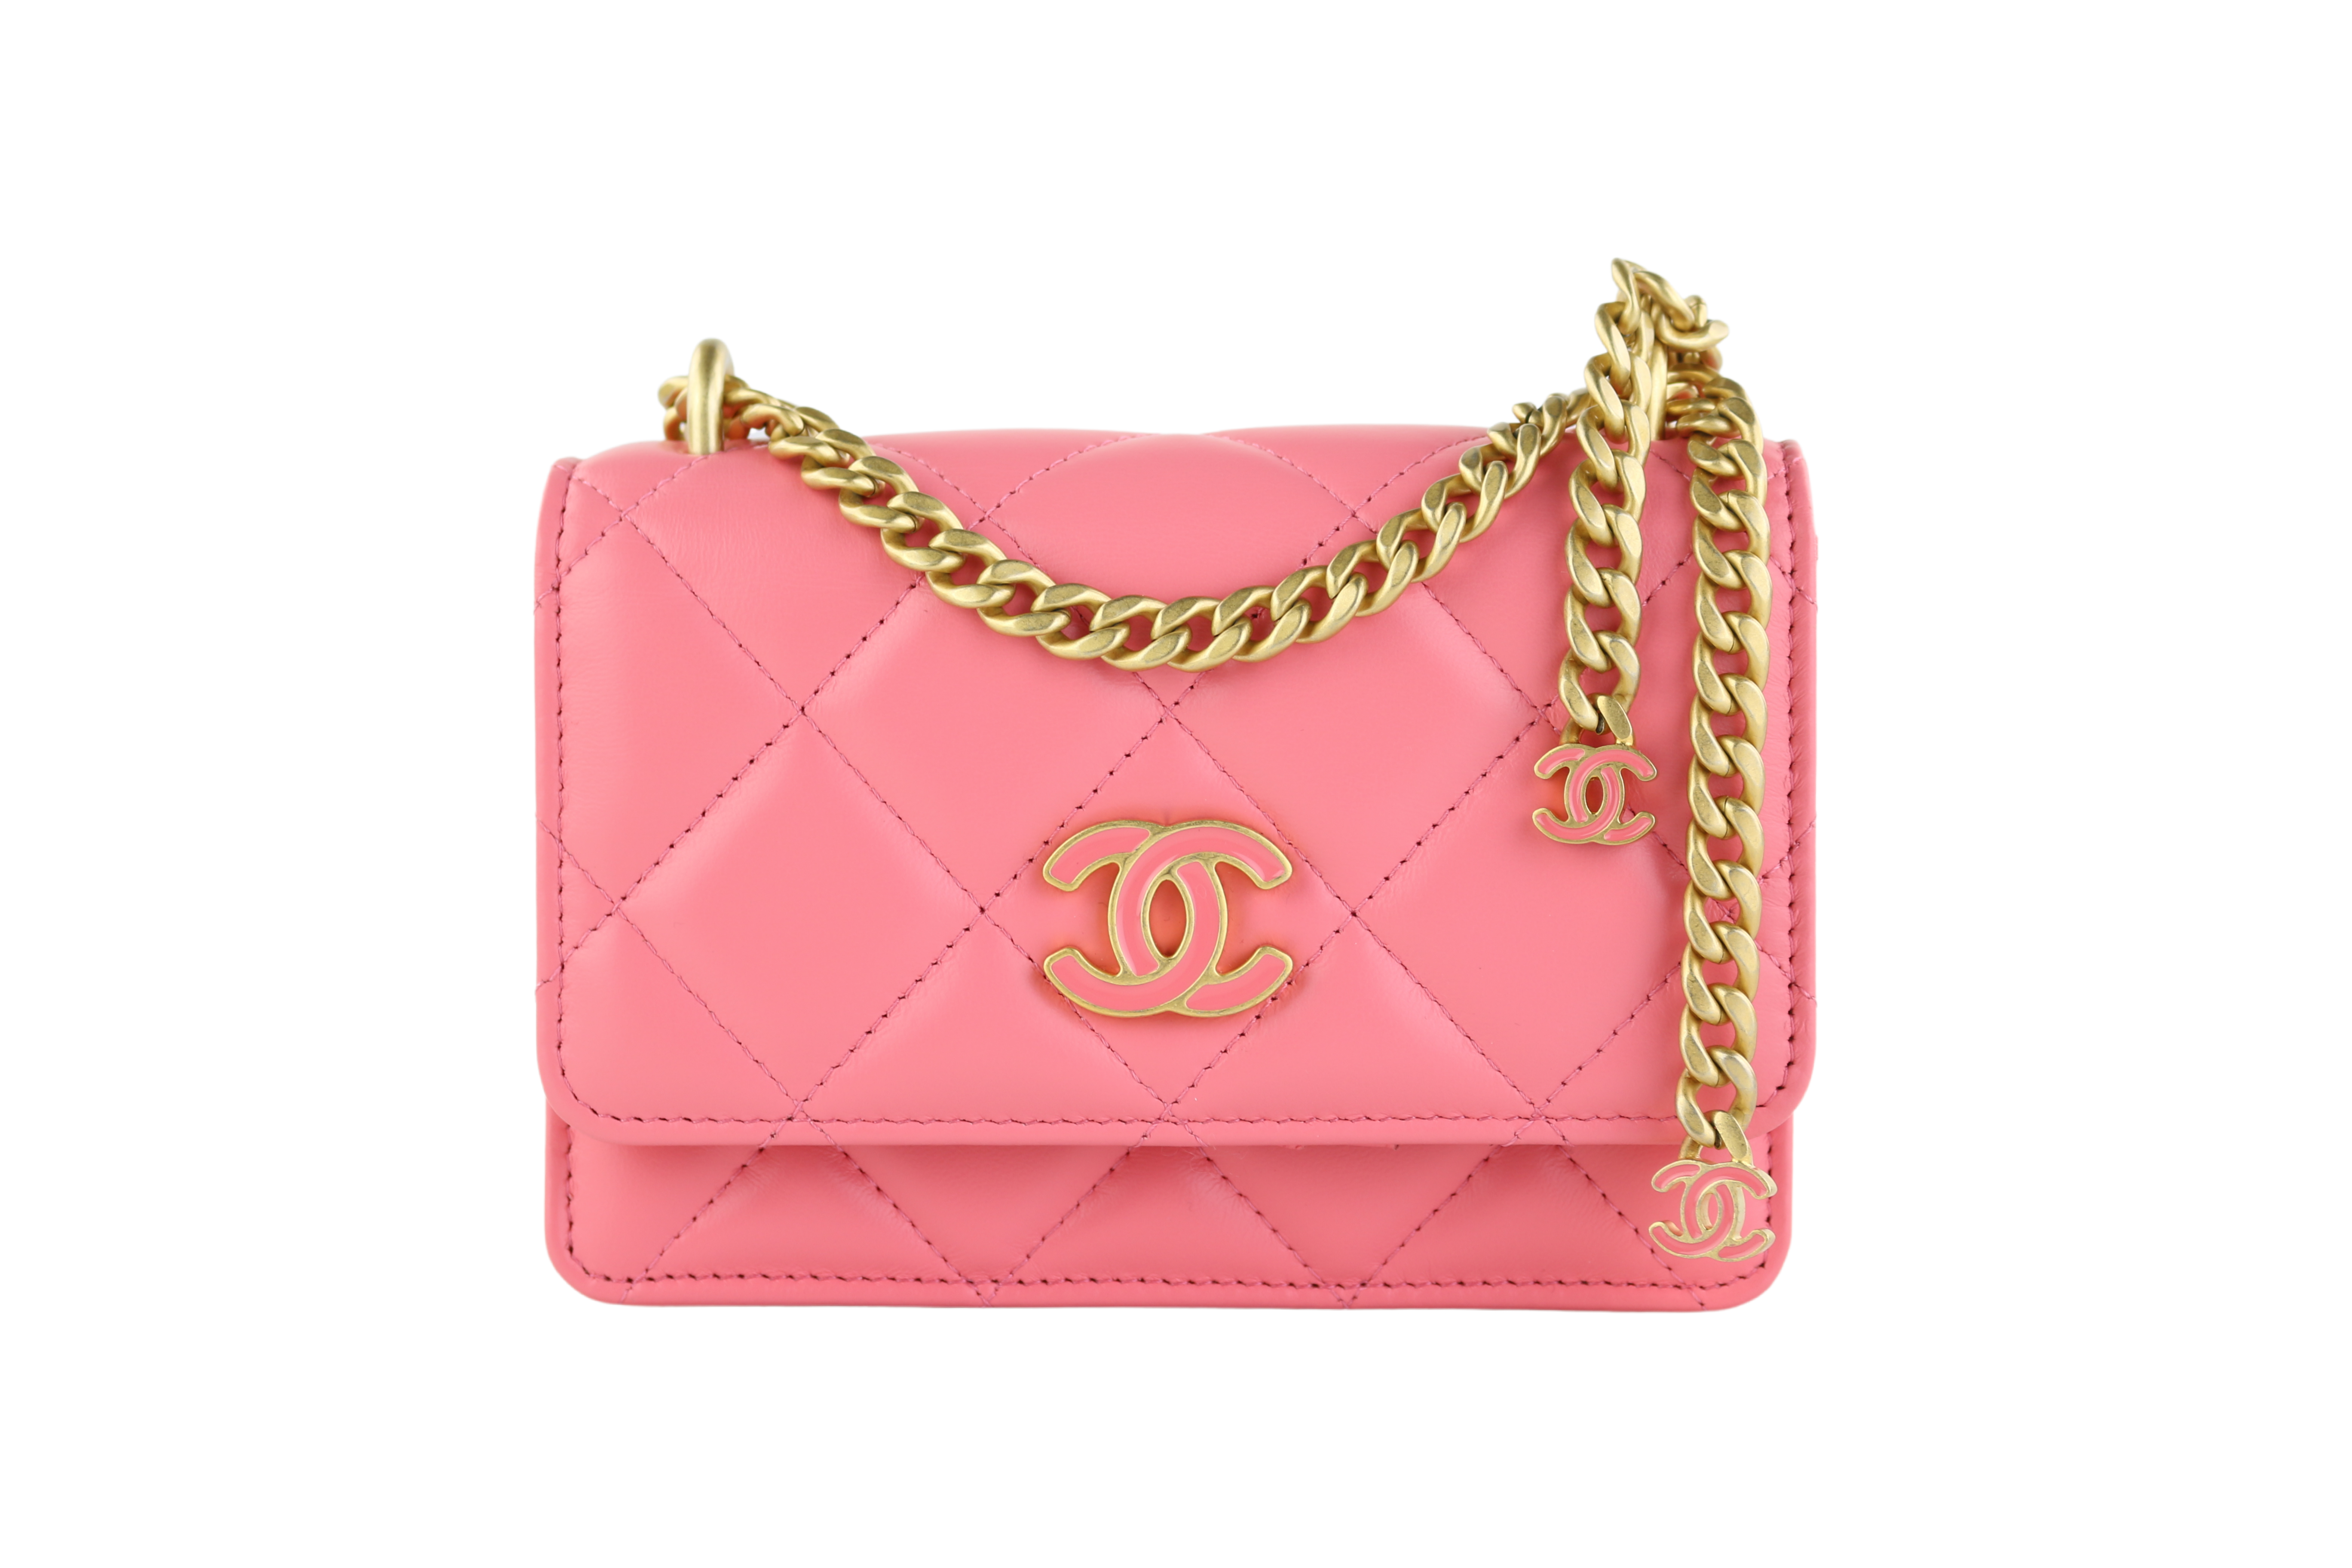 Chanel Chain Clutch Top Handle Chain AP2682 B06660 NI683, Pink, One Size